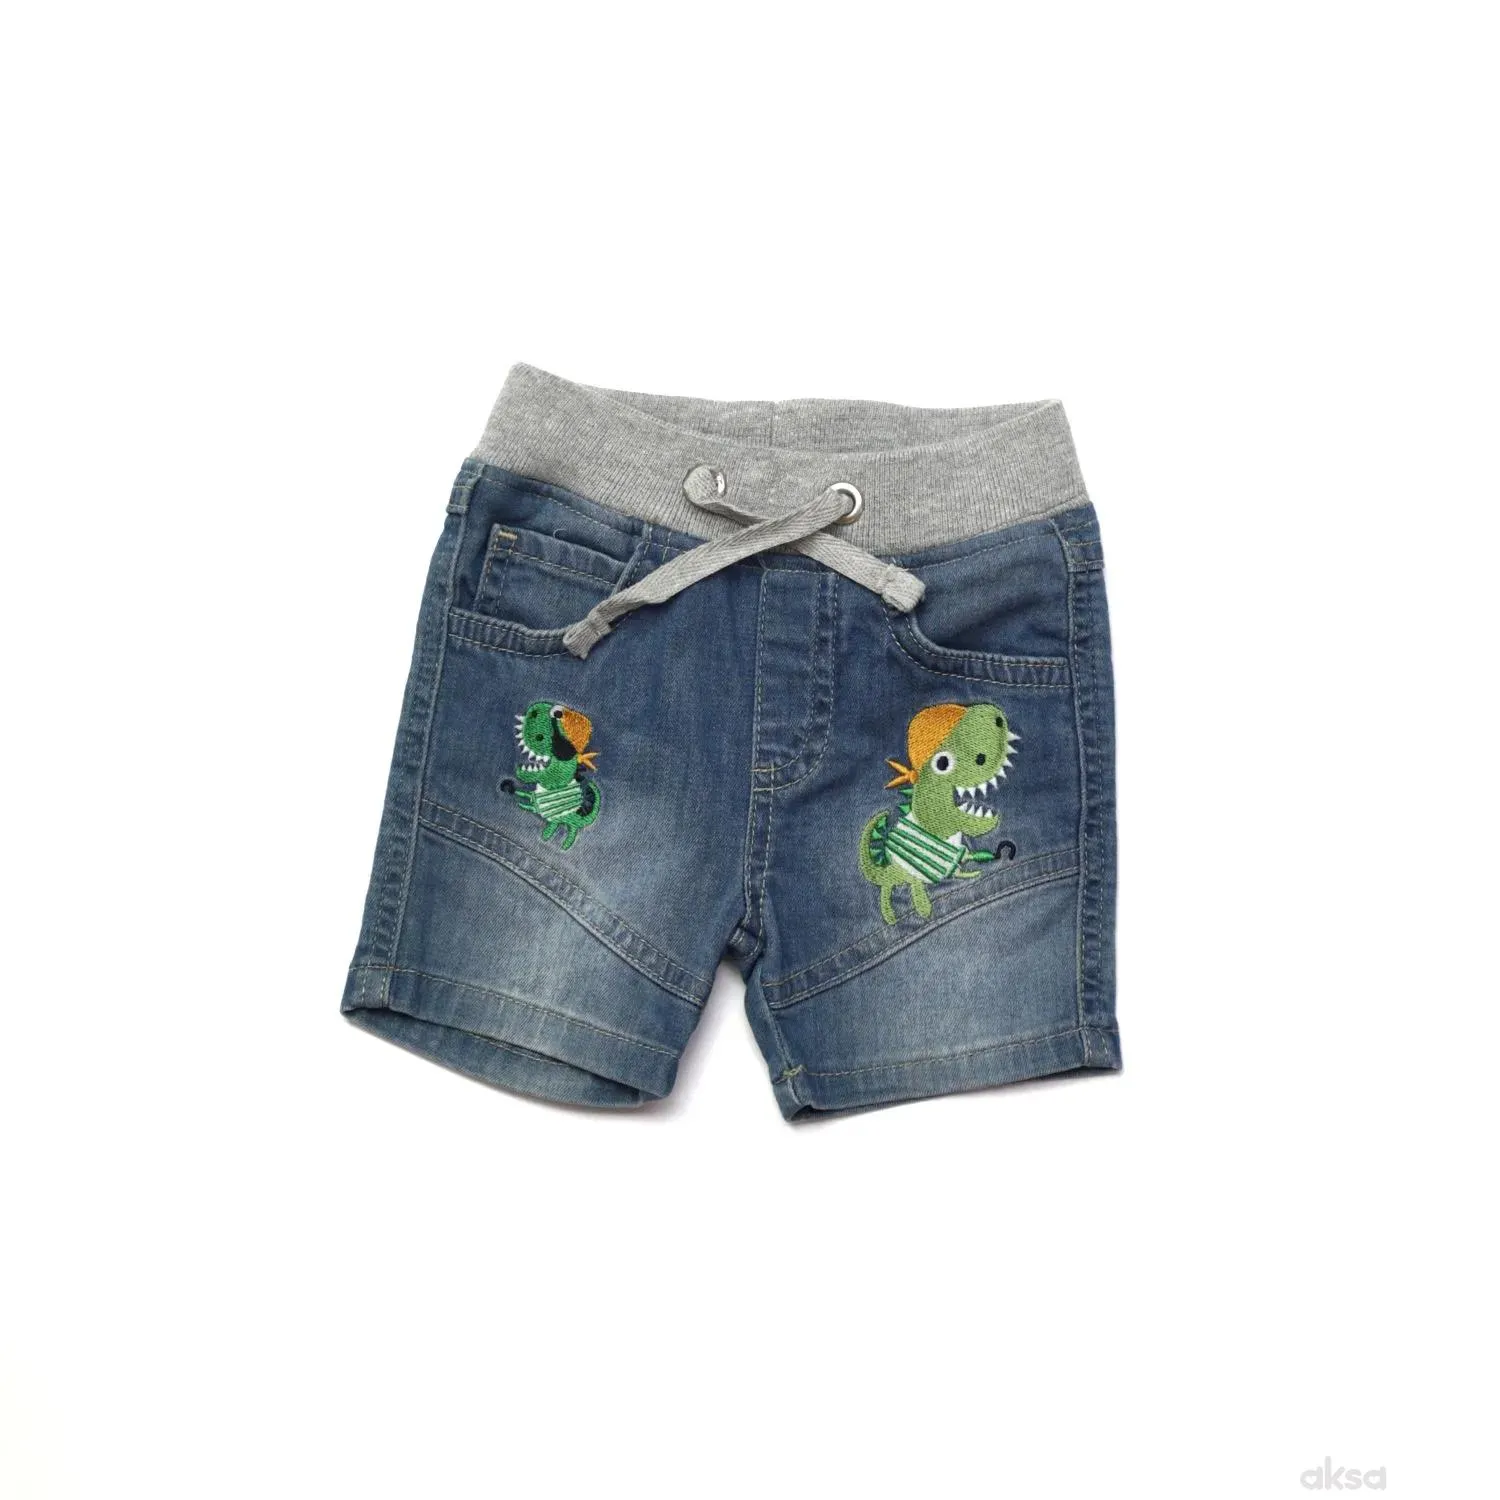 Lillo&Pippo teksas šorts,dječaci 